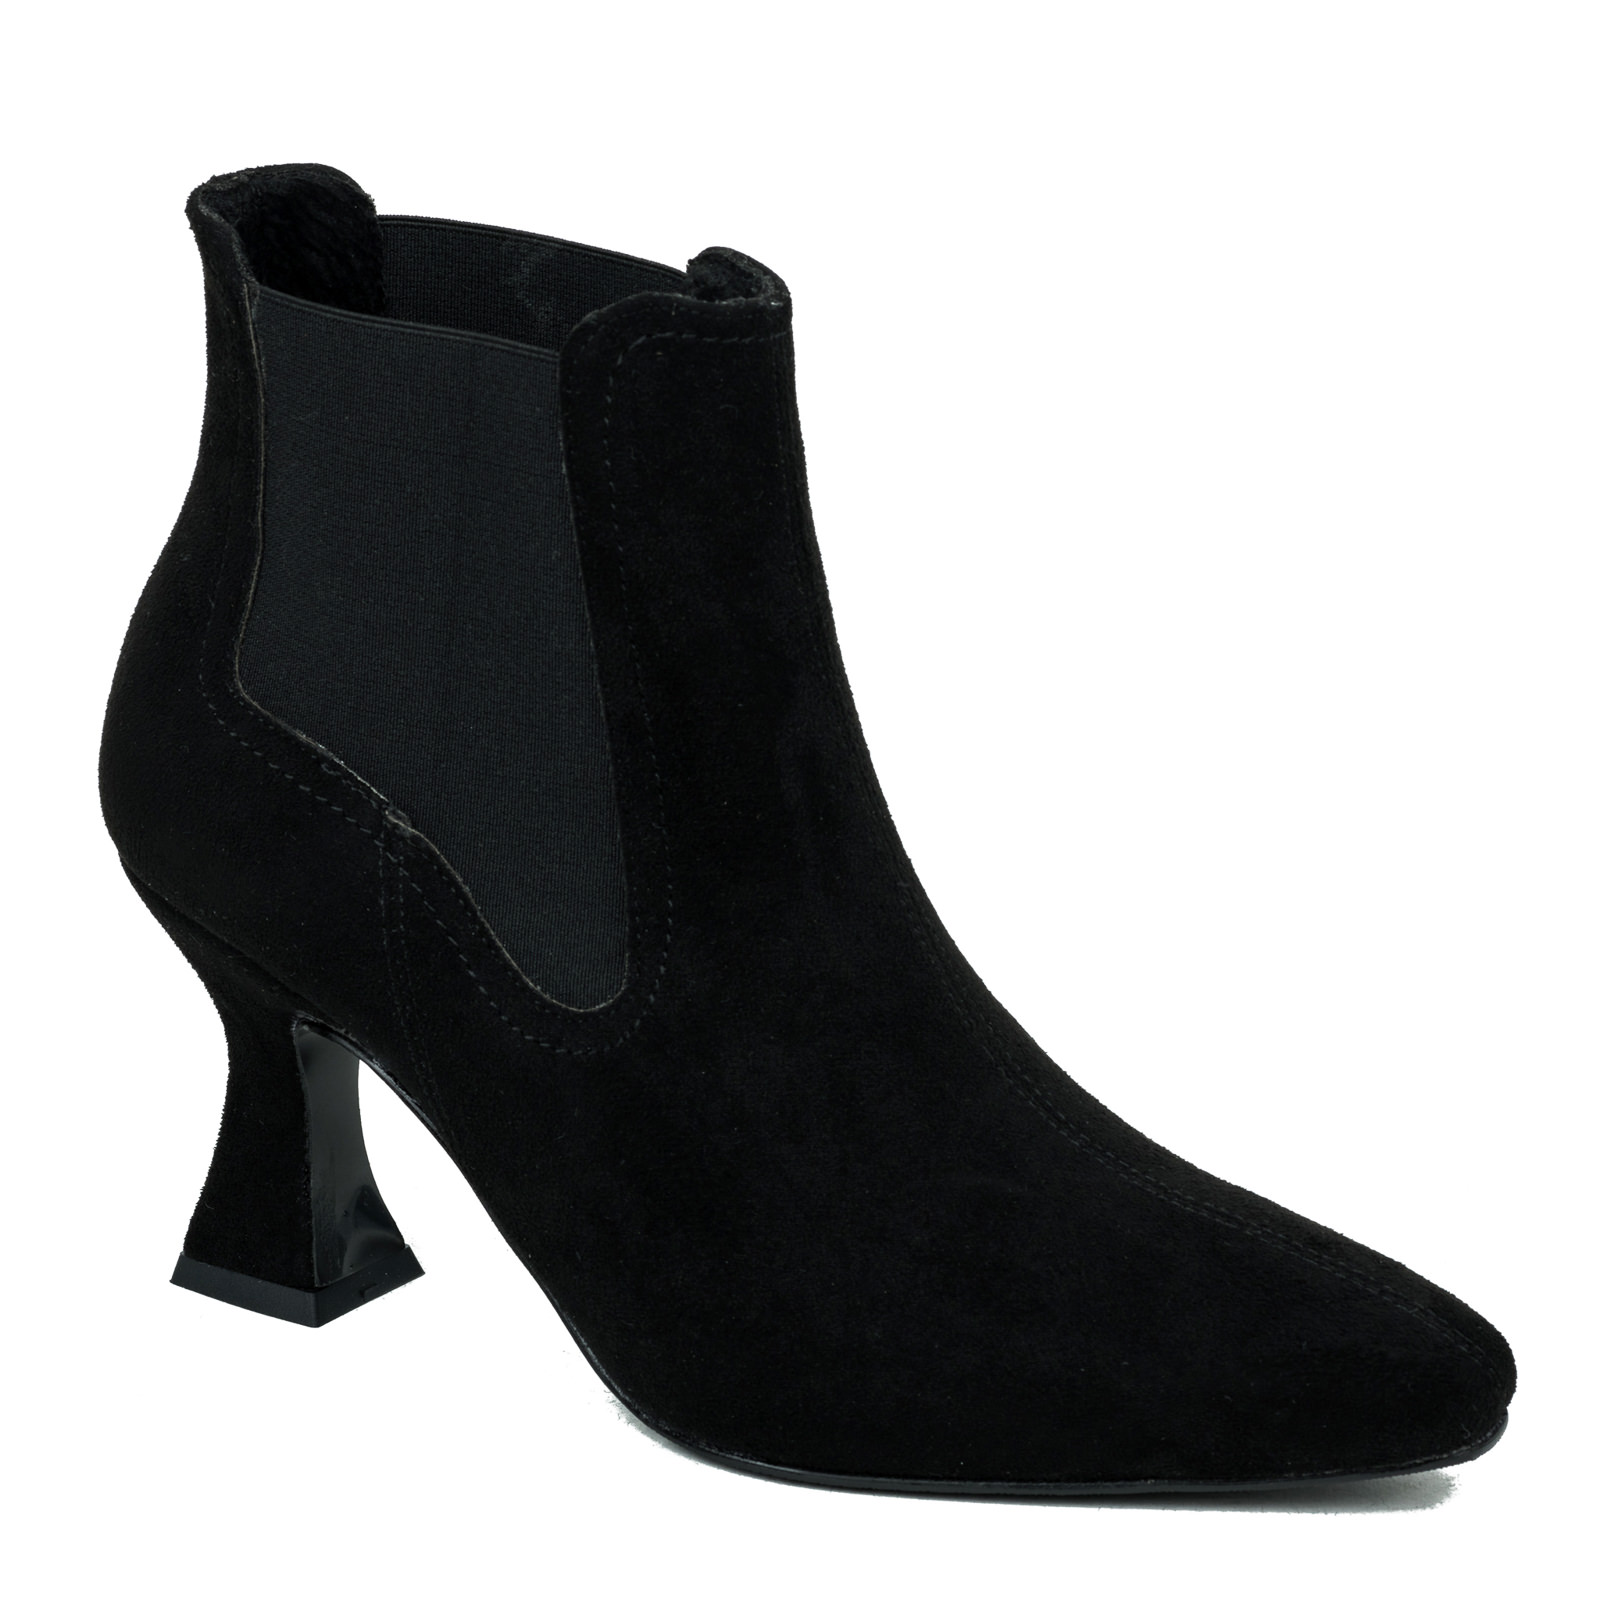 Women ankle boots B170 - BLACK